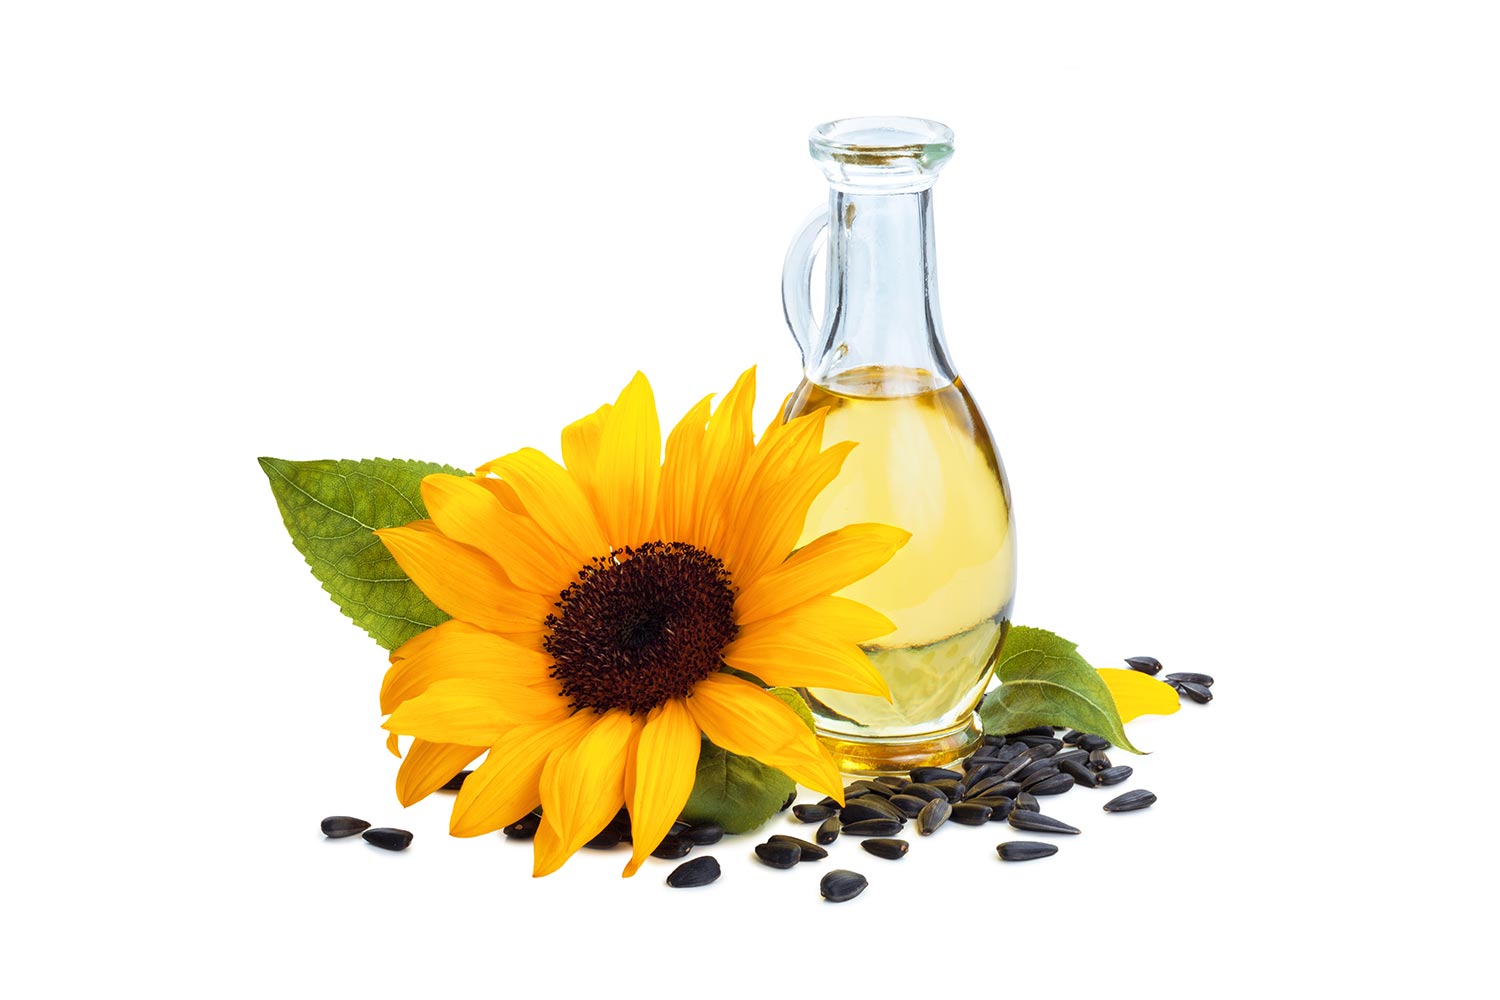 Sunflowers, sunflower oil and sunflower seeds